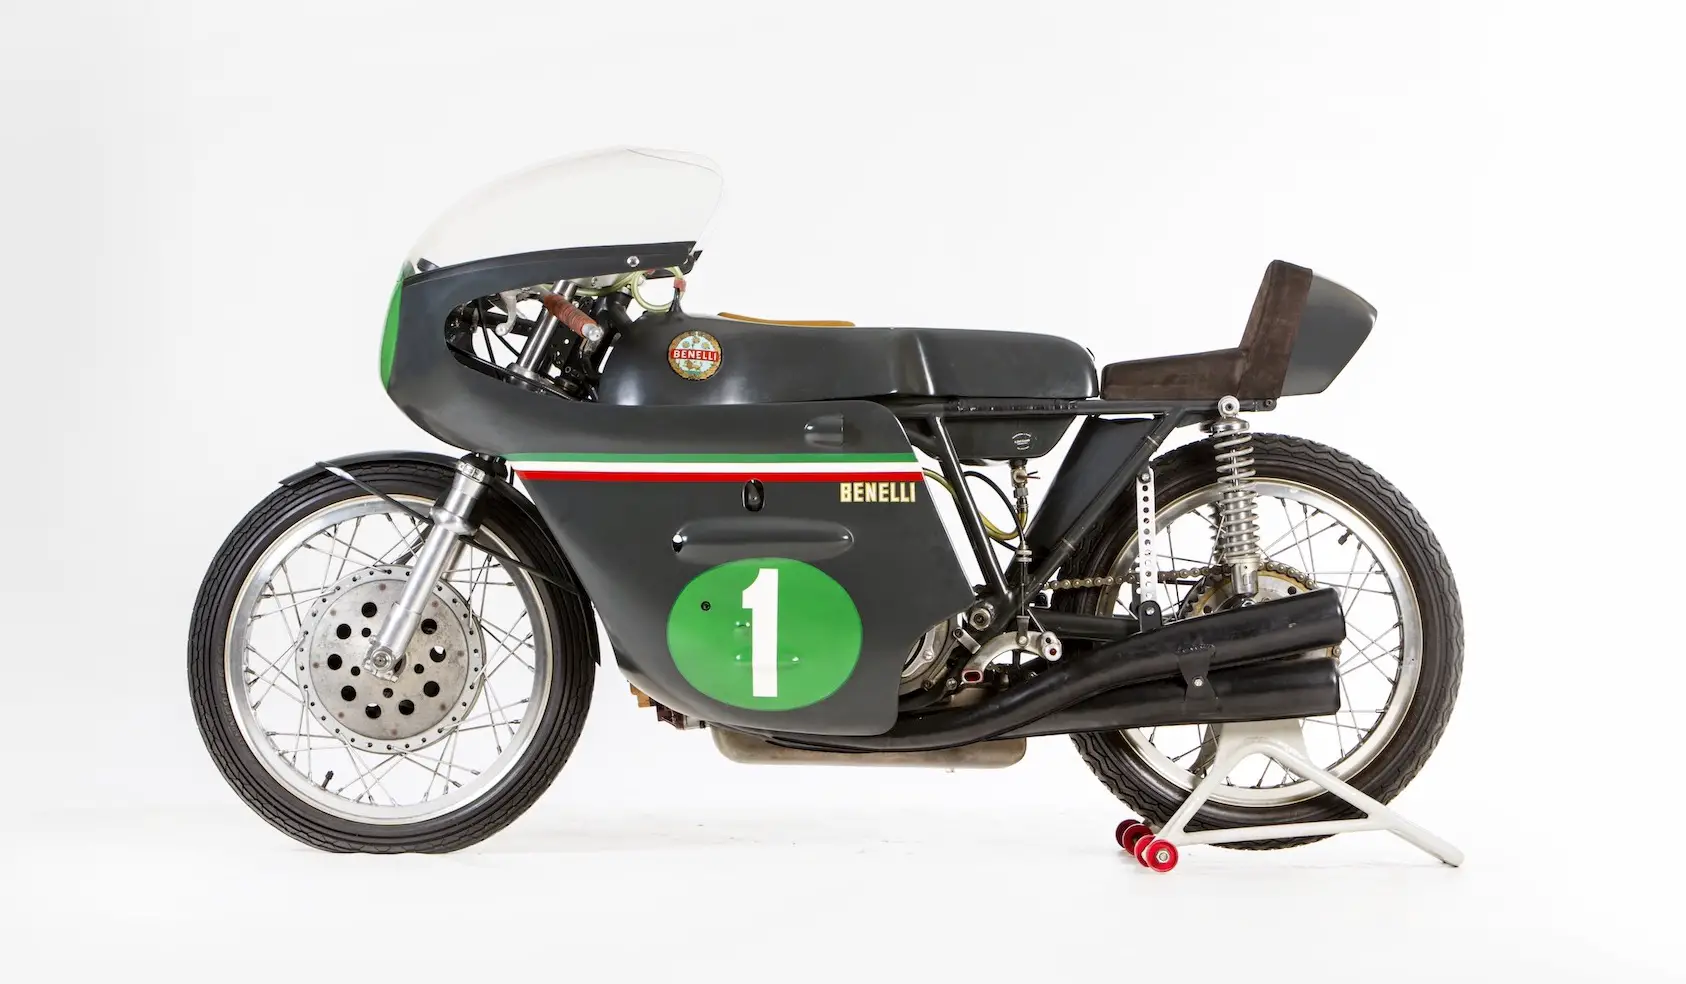 Provini 1964 Benelli 250 Bialbero 4 cyl GP copy - Two Benelli 250 Grand Prix Motorcycles Break Records At Auction